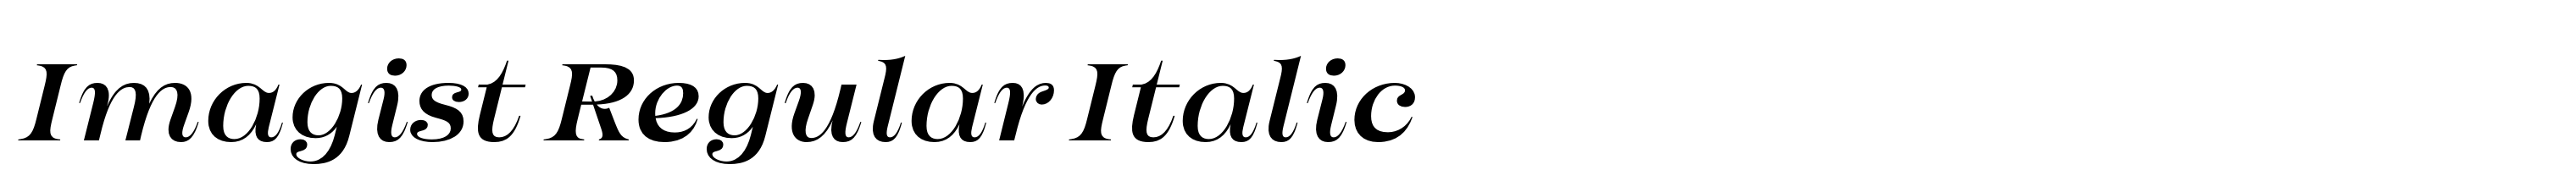 Imagist Regular Italic